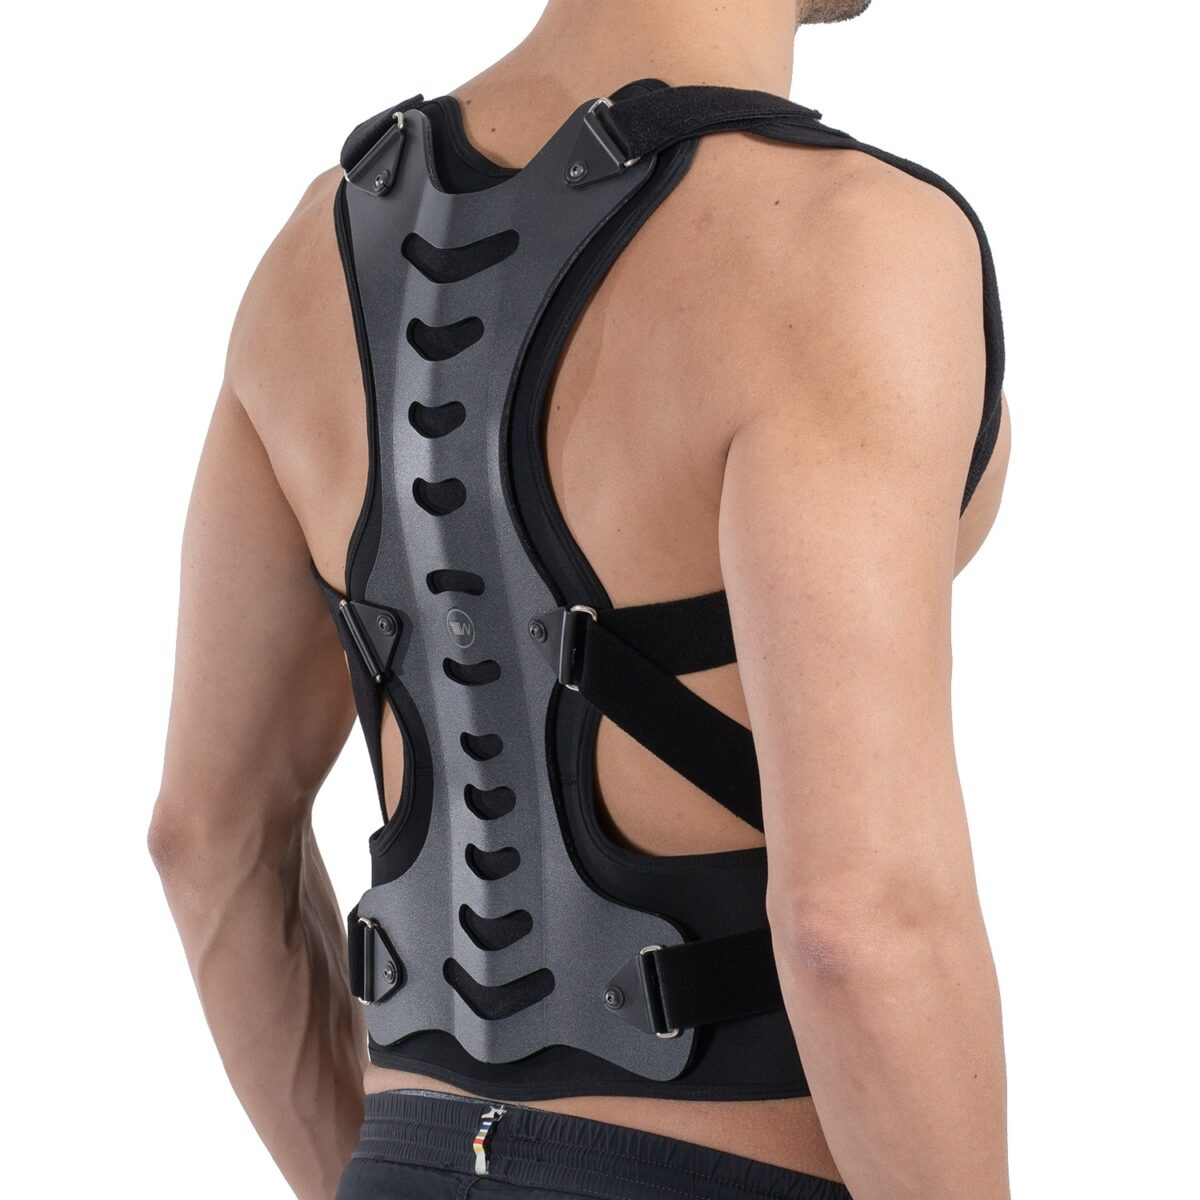 wingmed orthopedic equipments W444 spinal corset 54